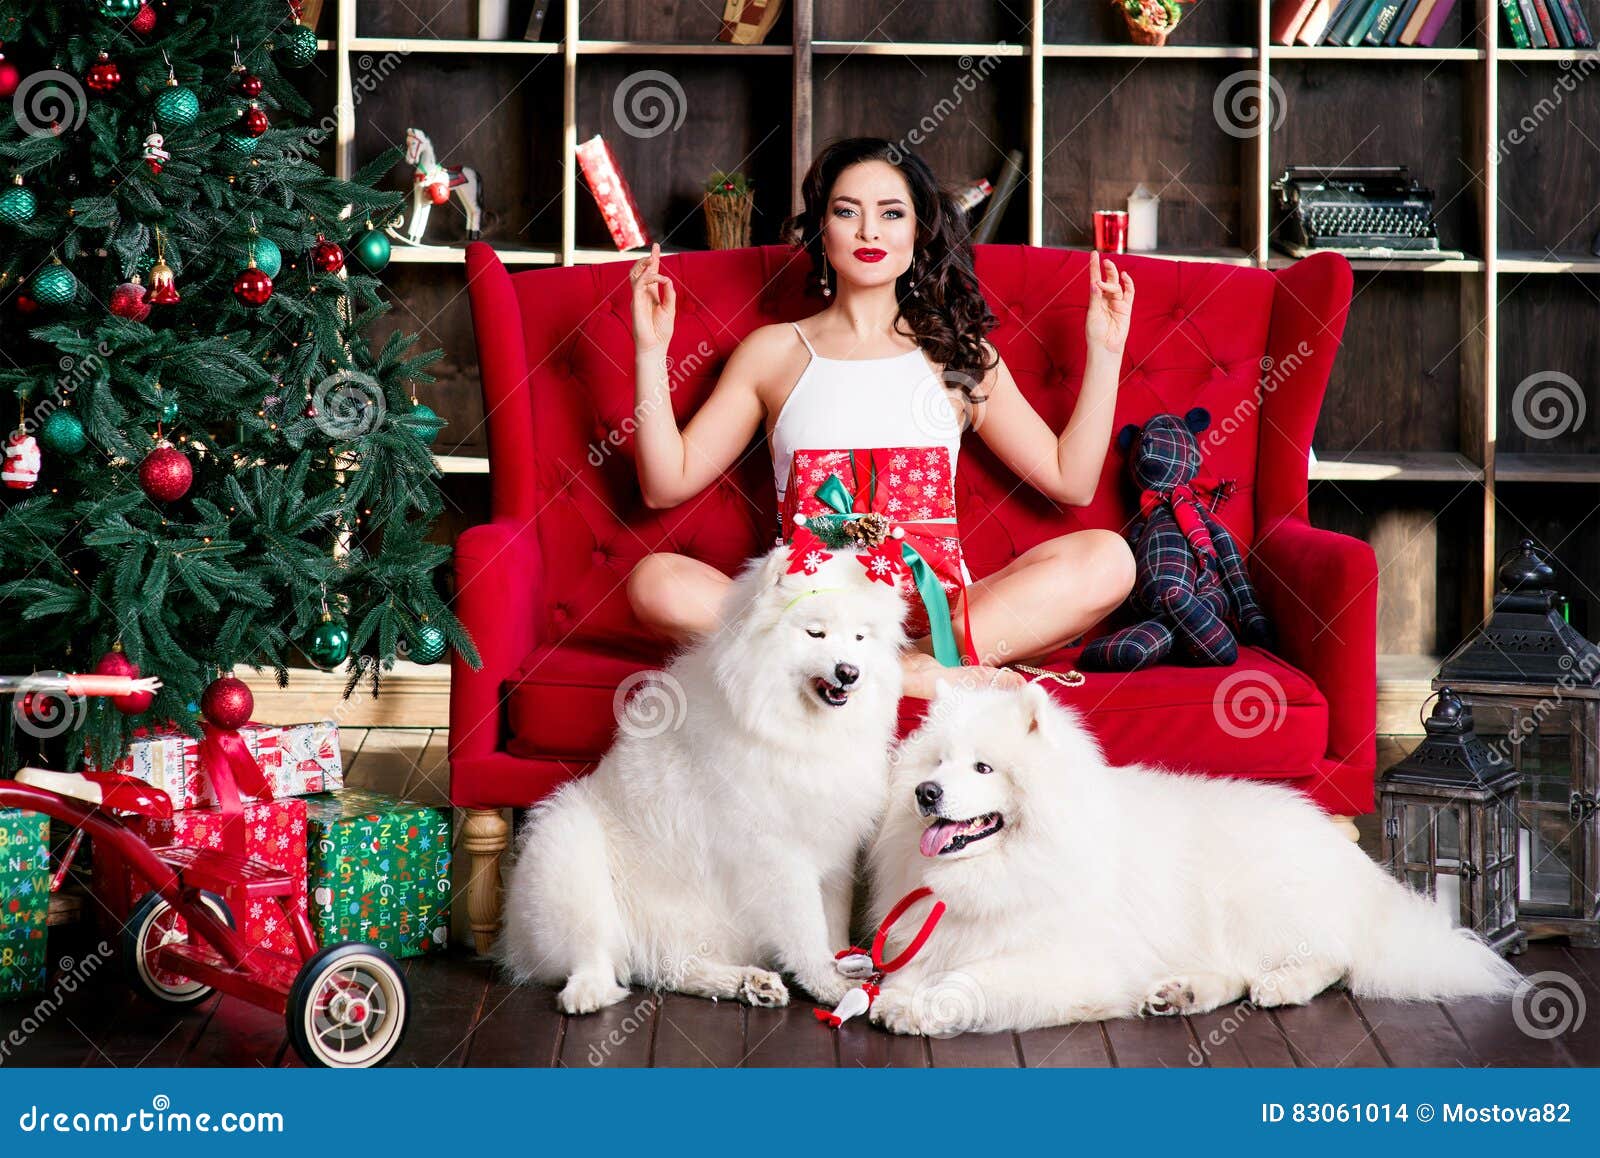 1,449 Woman Underwear Christmas Stock Photos image